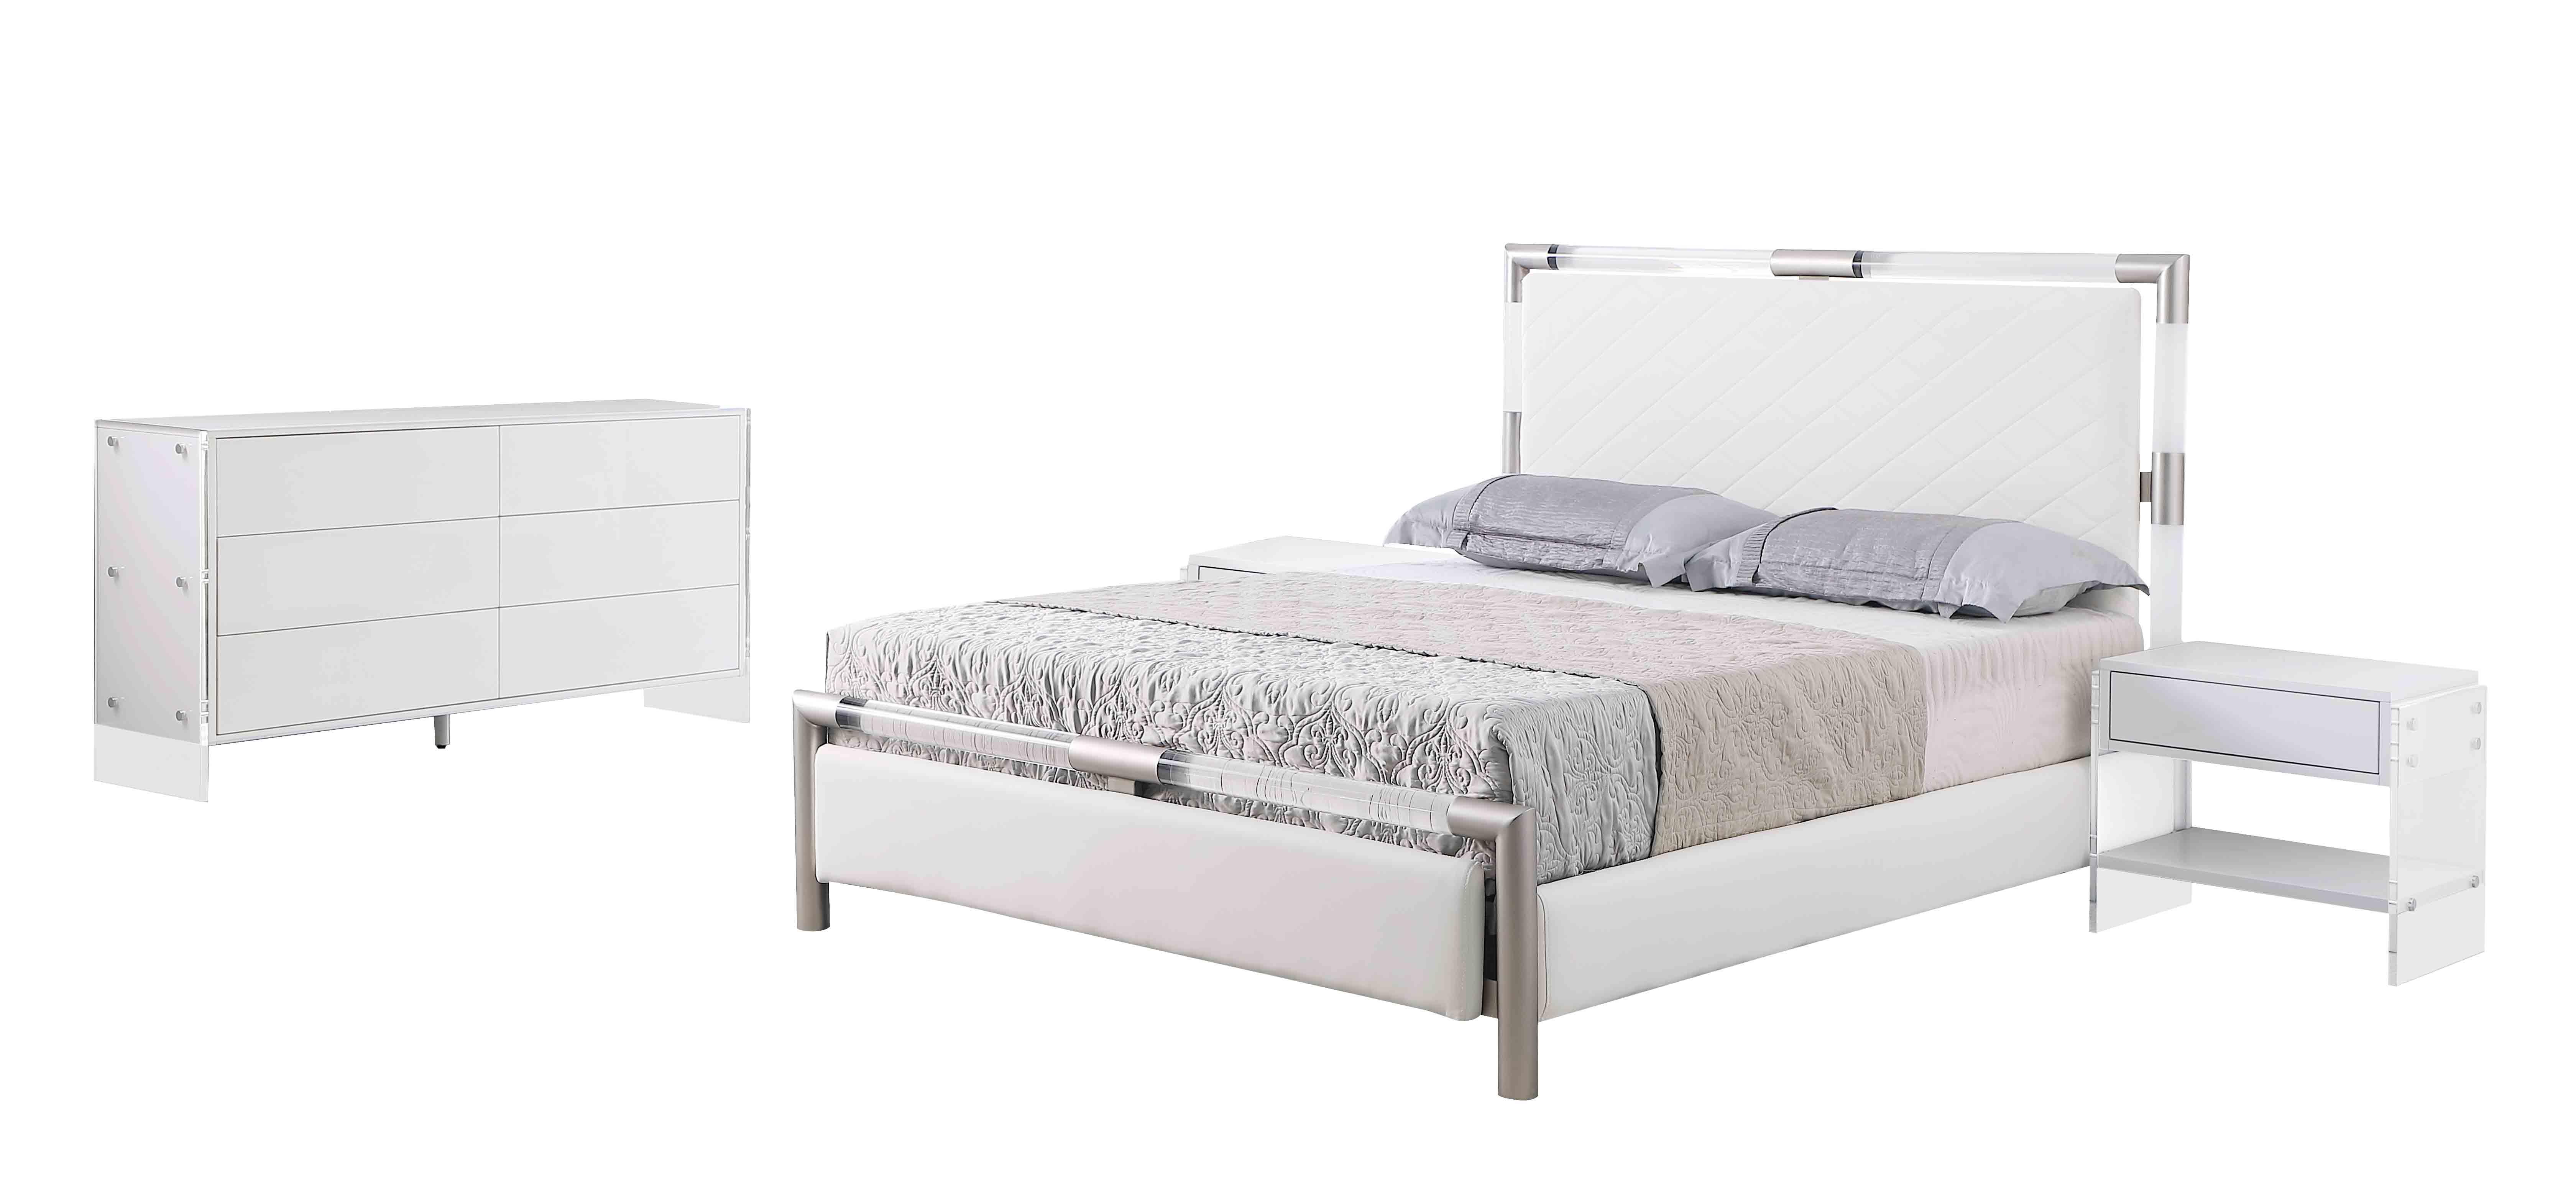 Contemporary Platform Bedroom Set Barcelona BARCELONAQN-Set-4 in White Leatherette